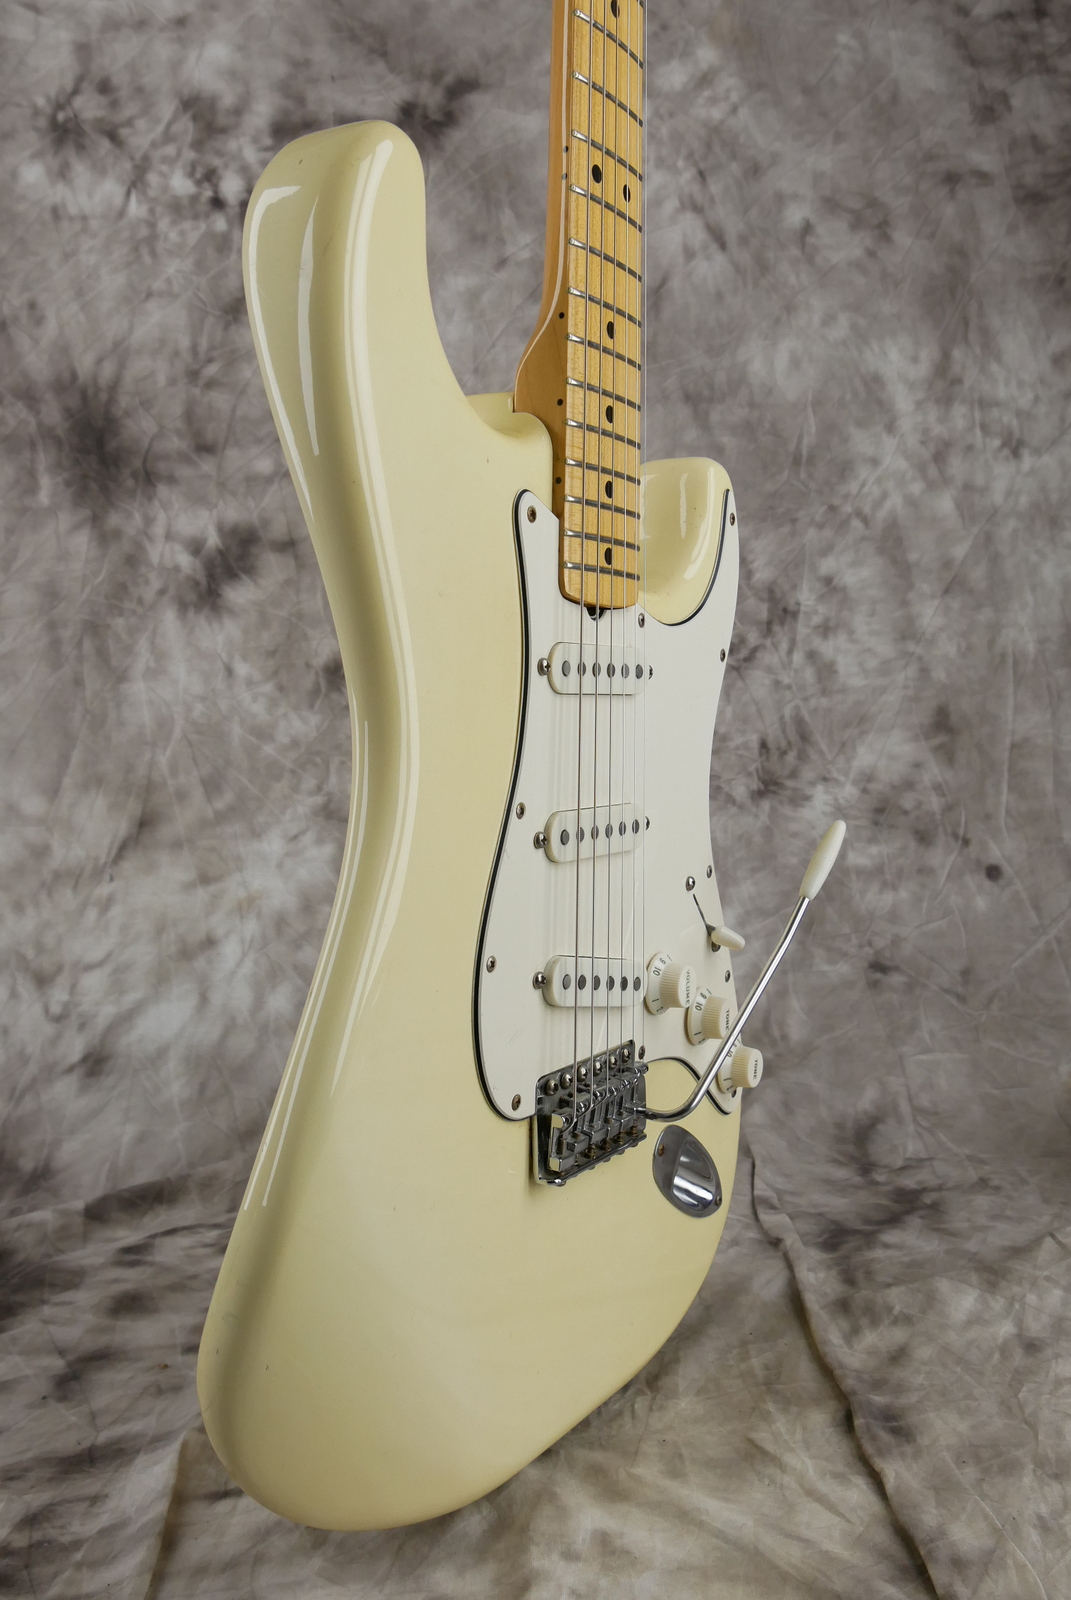 Fender_Stratocaster_Dan_smith_1982_tremolo_hardcase-005.JPG